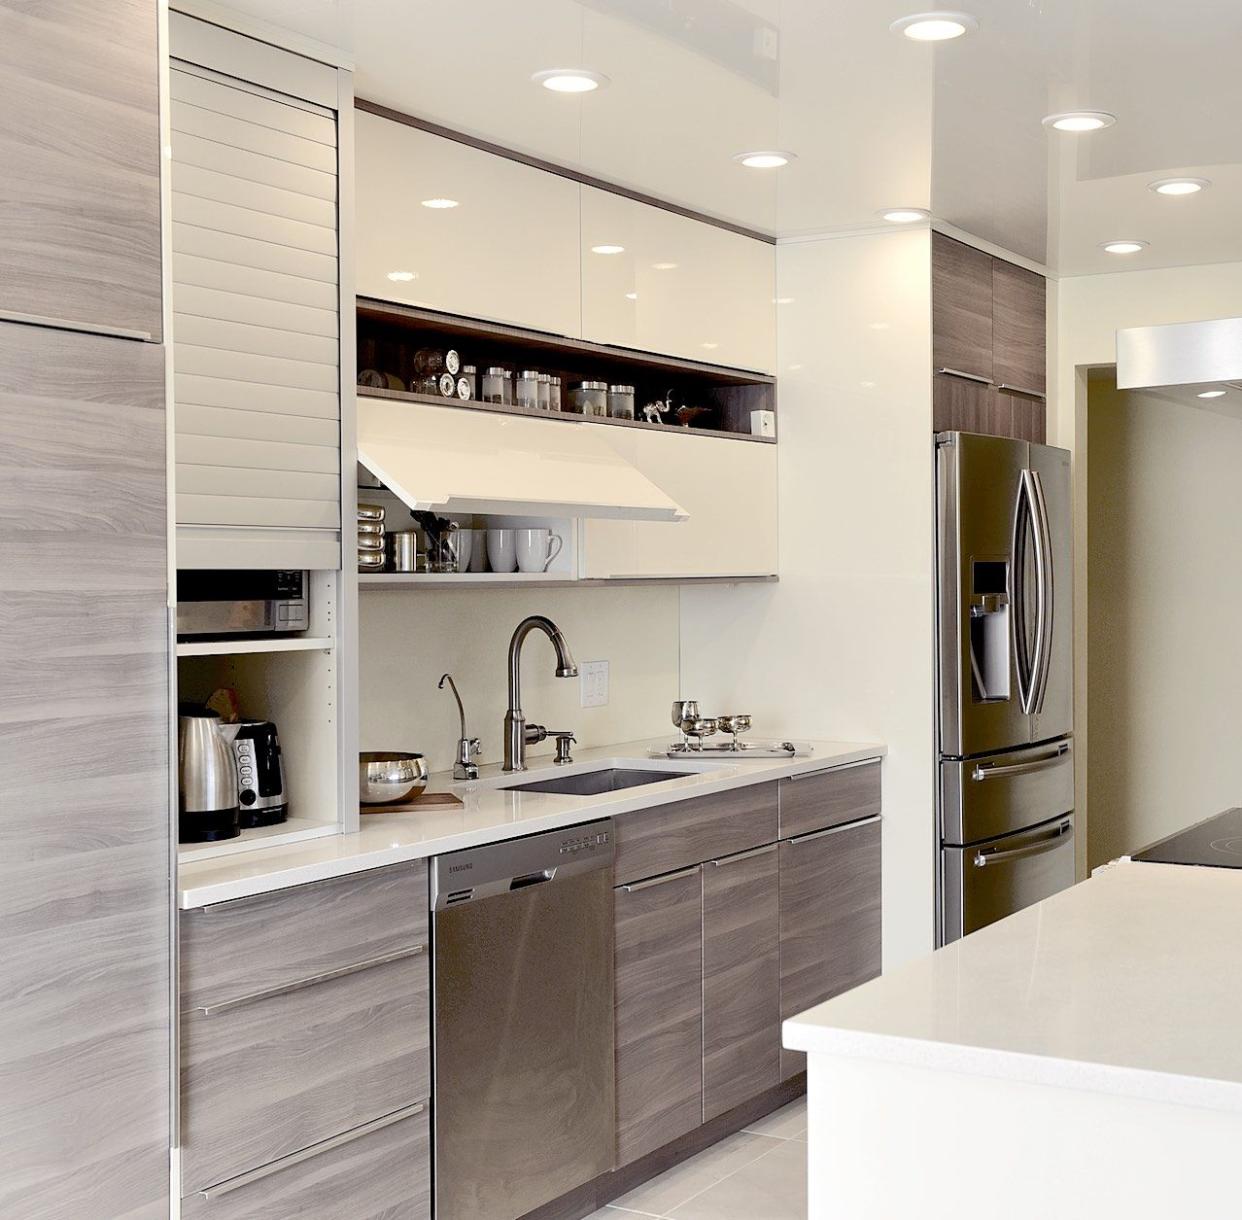 ikea cabinets in a custom designed kitchen